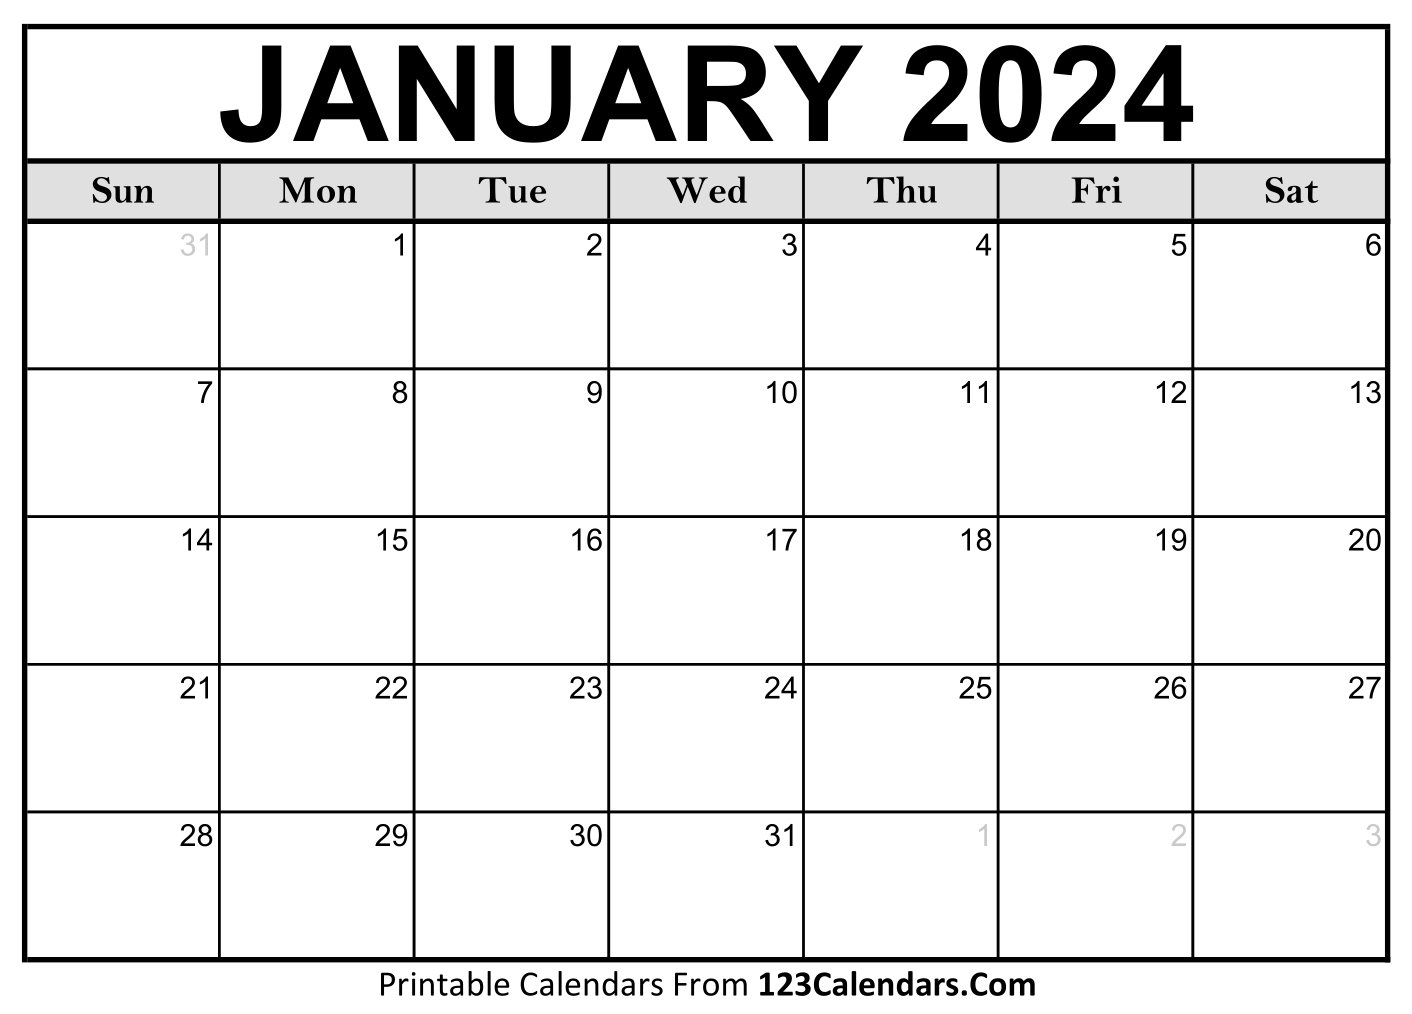 Printable January 2024 Calendar Templates - 123Calendars | Printable 2024 January Calendar